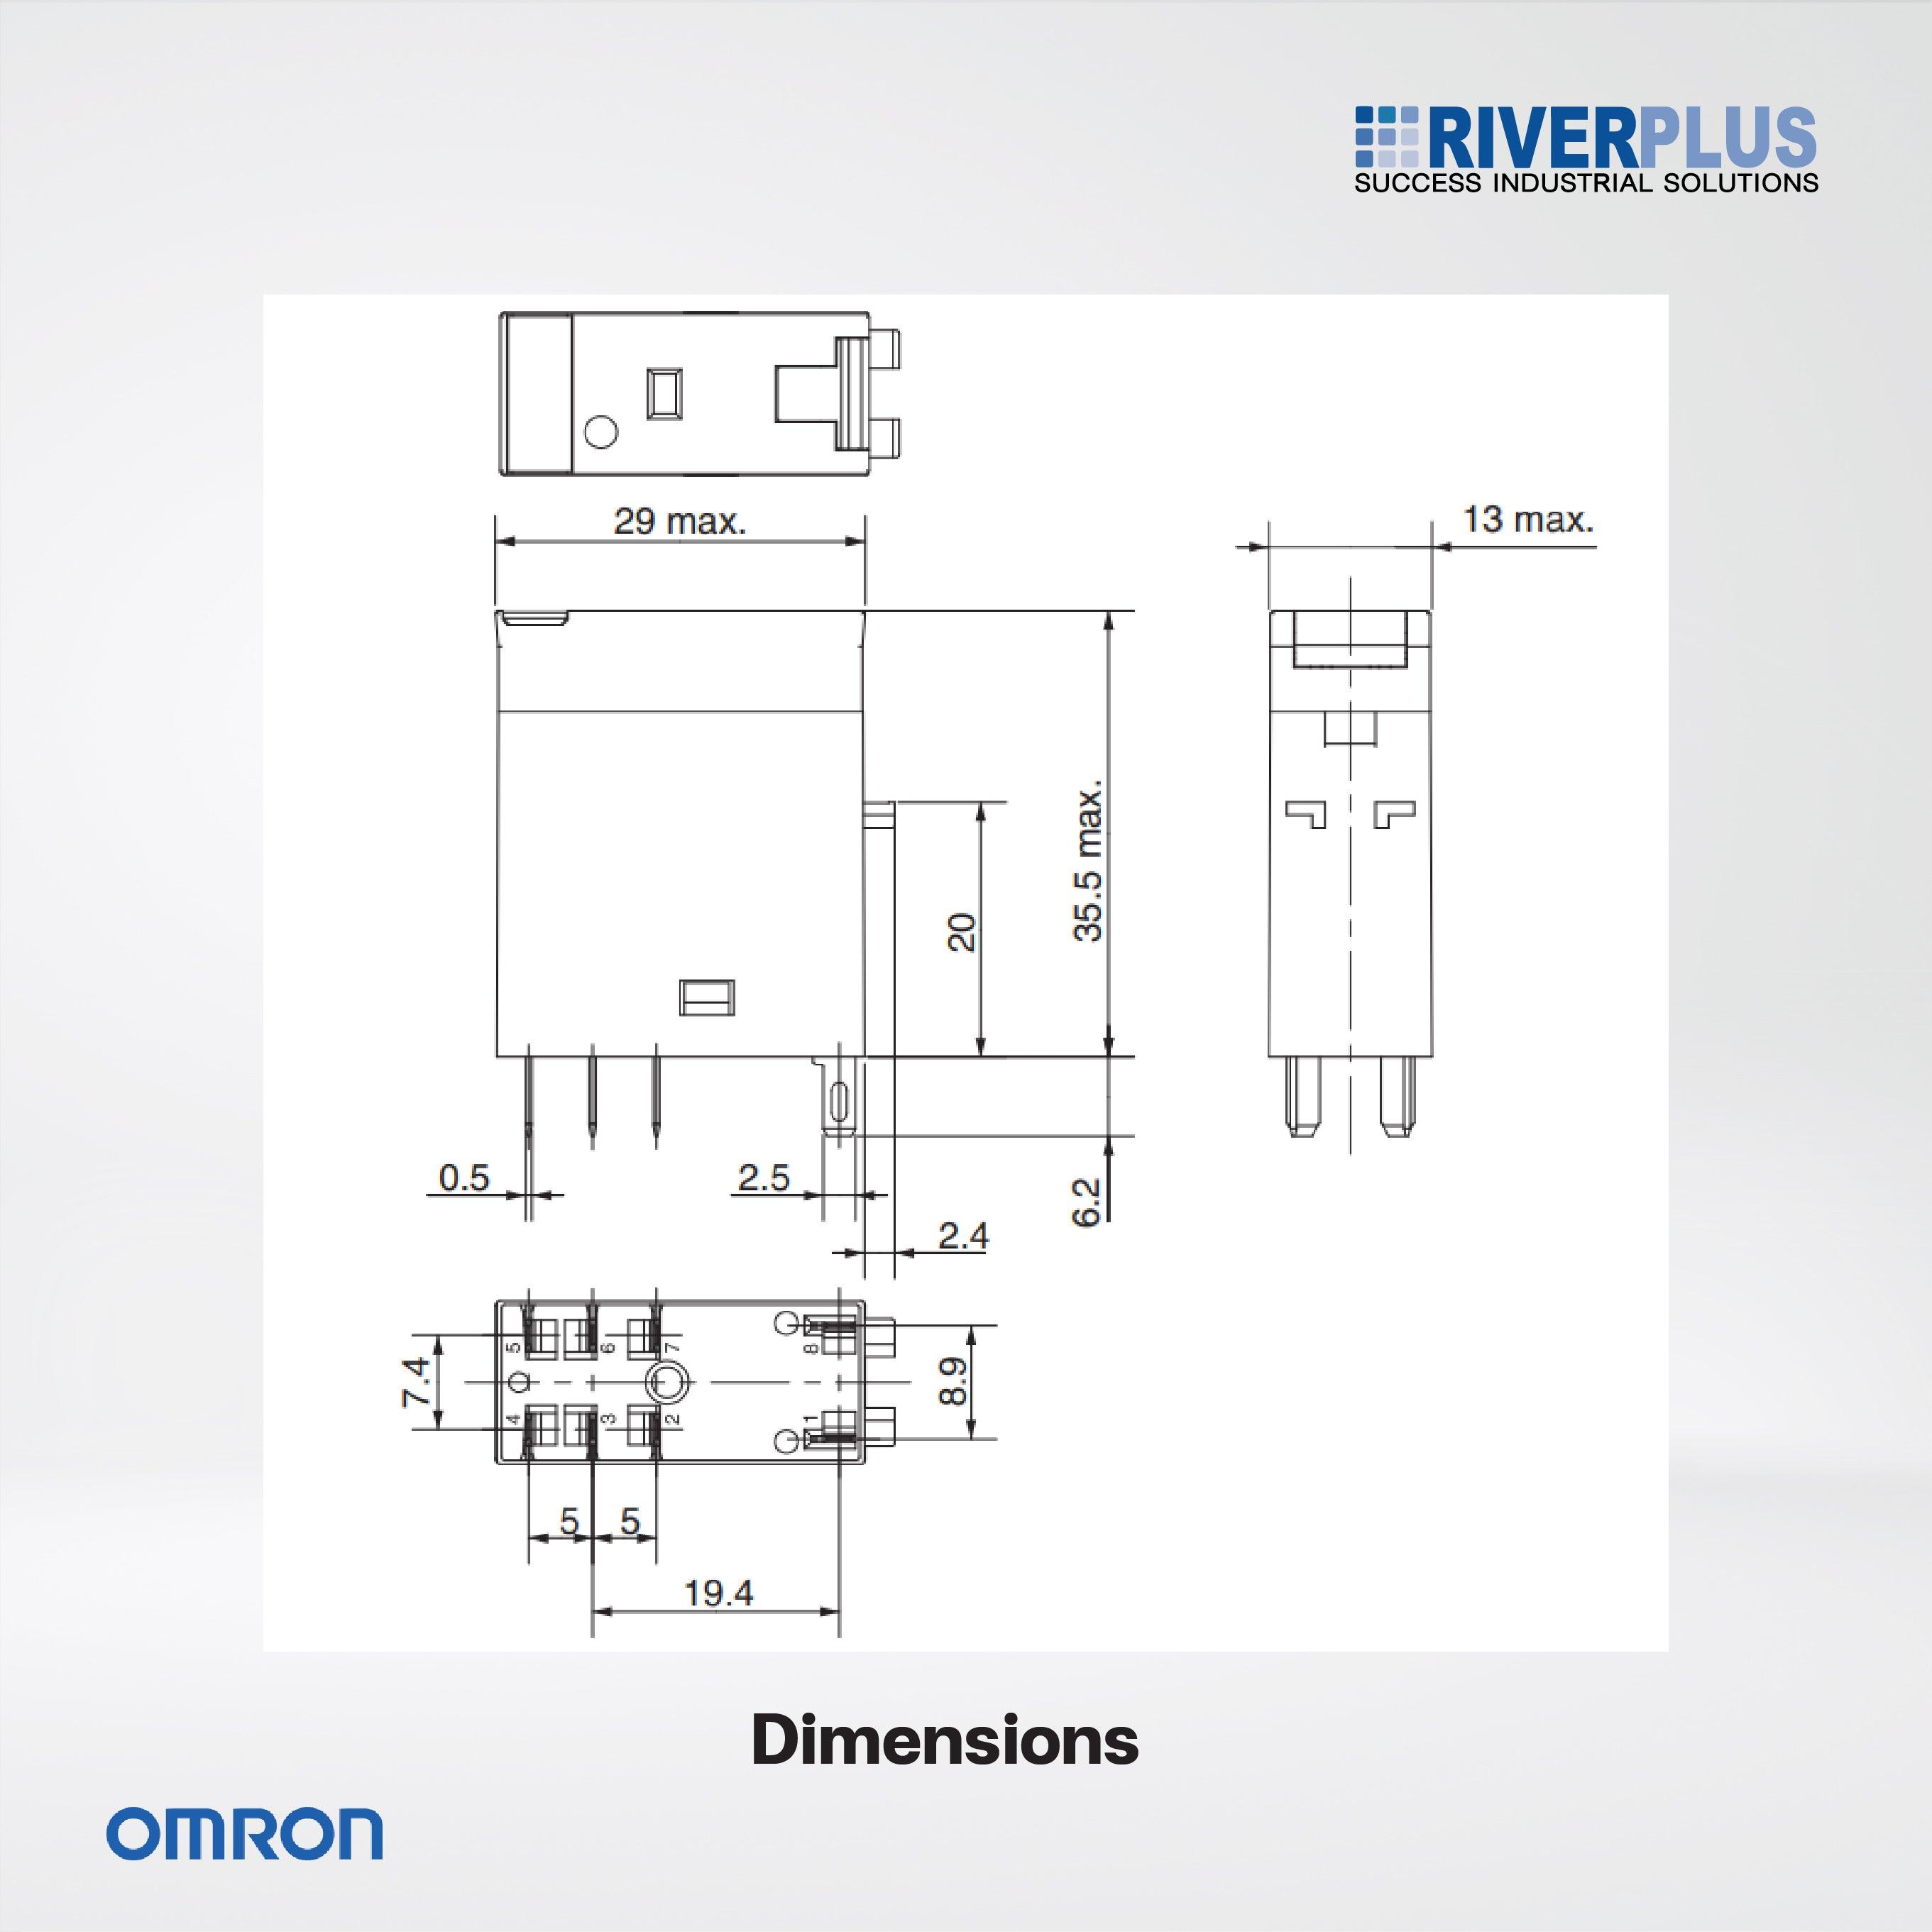 G2R-2-SND DC24(S) BY OMB Relay, plug-in, 8-pin, DPDT, 5 A, mech & LED indicators, coil suppressor, label facility - Riverplus